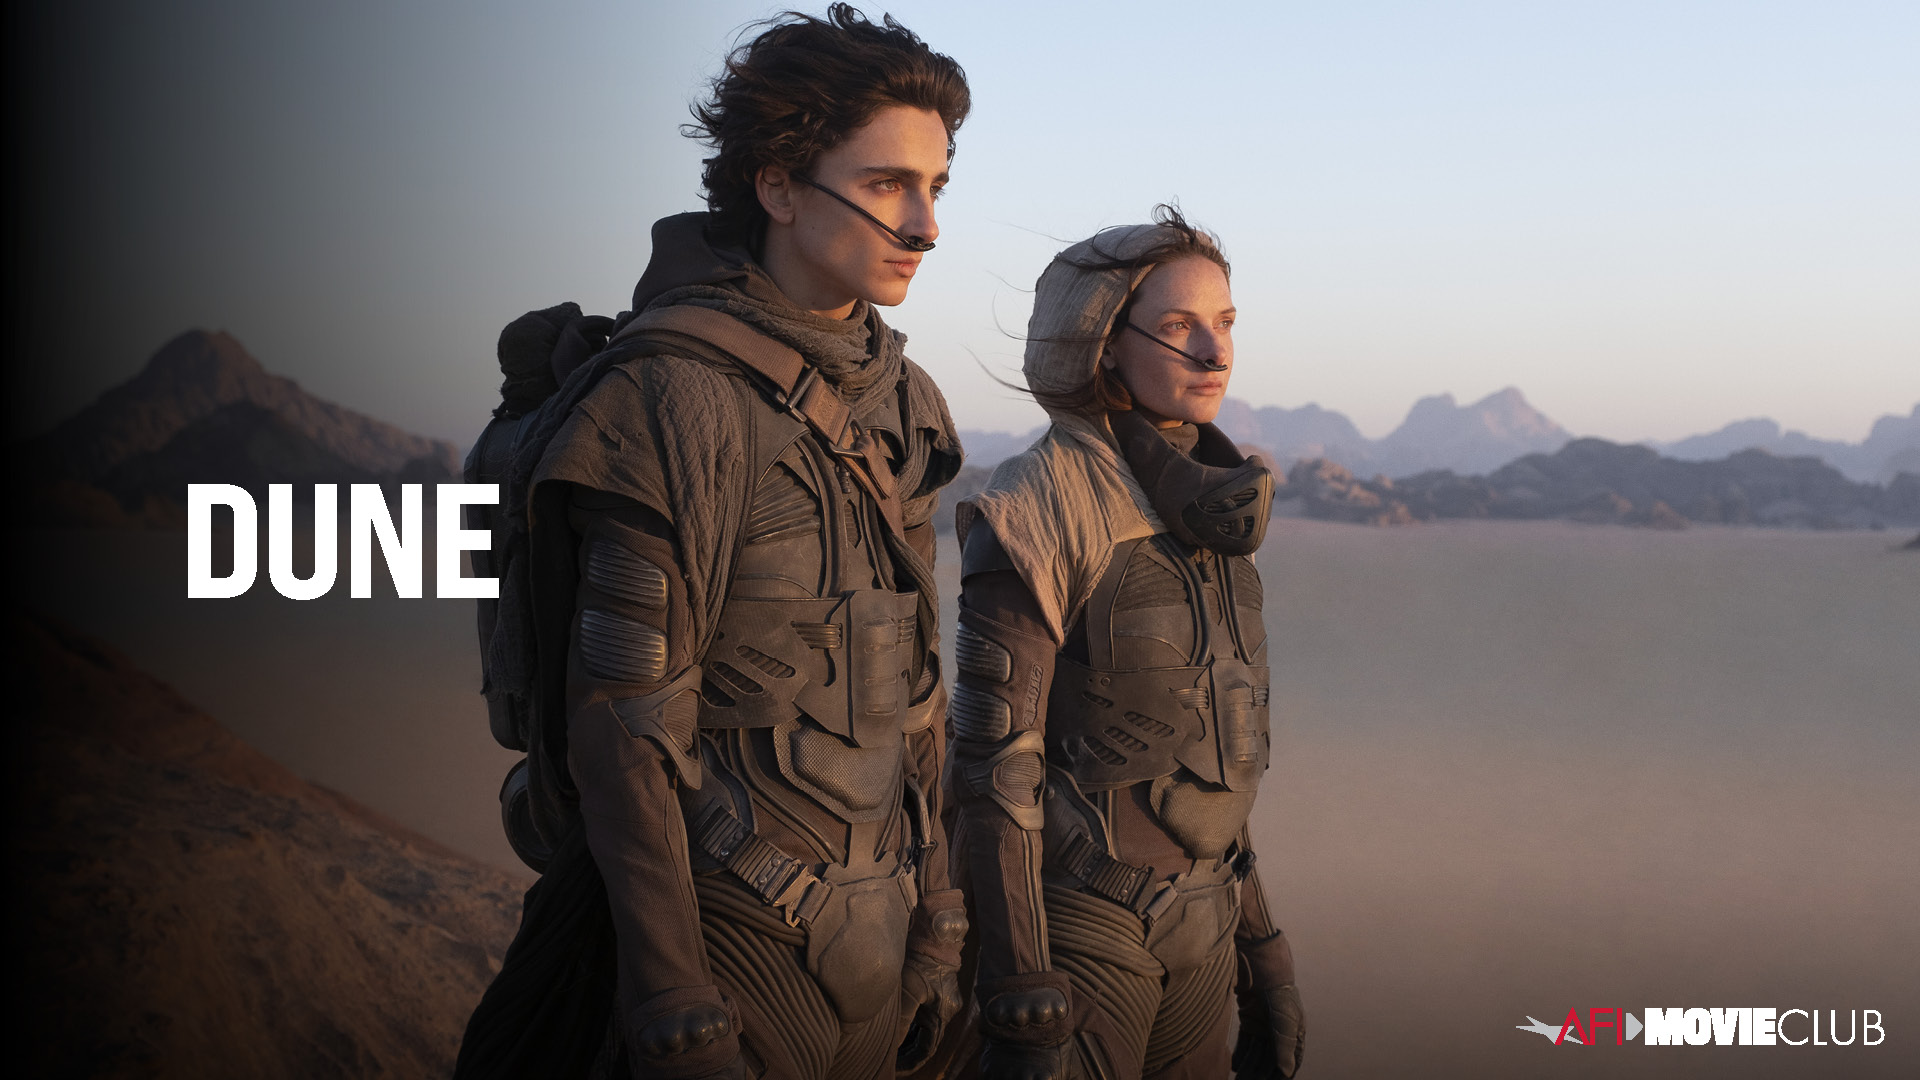 Dune Film Still - Rebecca Ferguson and Timothée Chalamet